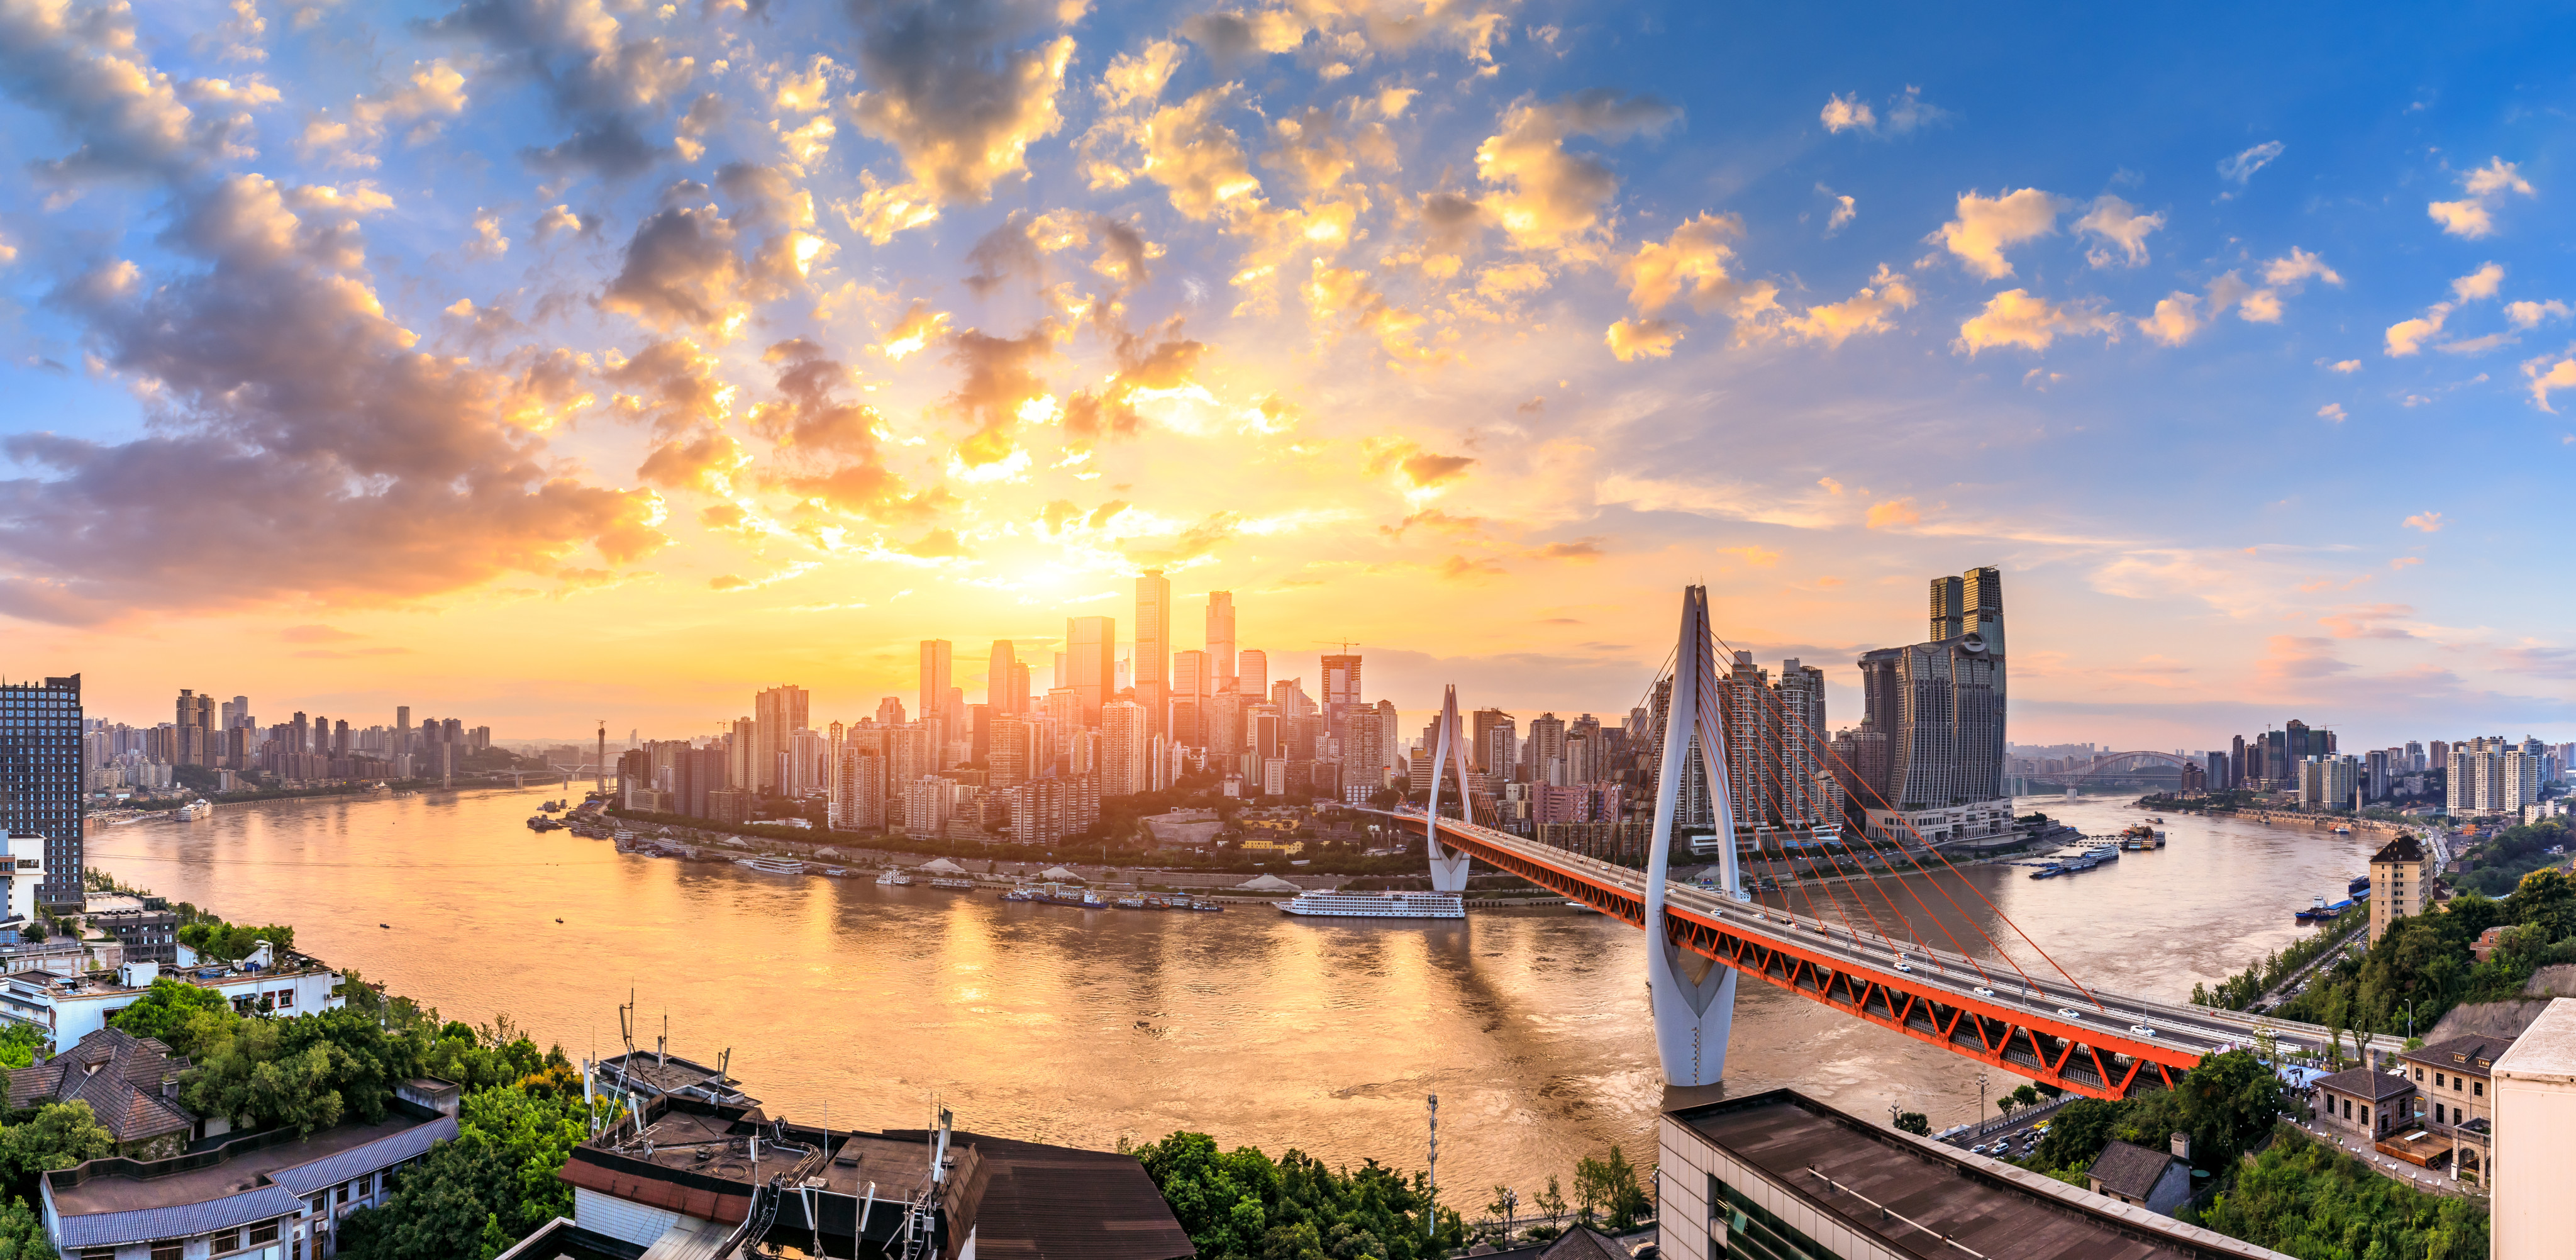 A bird’s-eye view of southwestern Chongqing’s skyline. Photo: Shutterstock